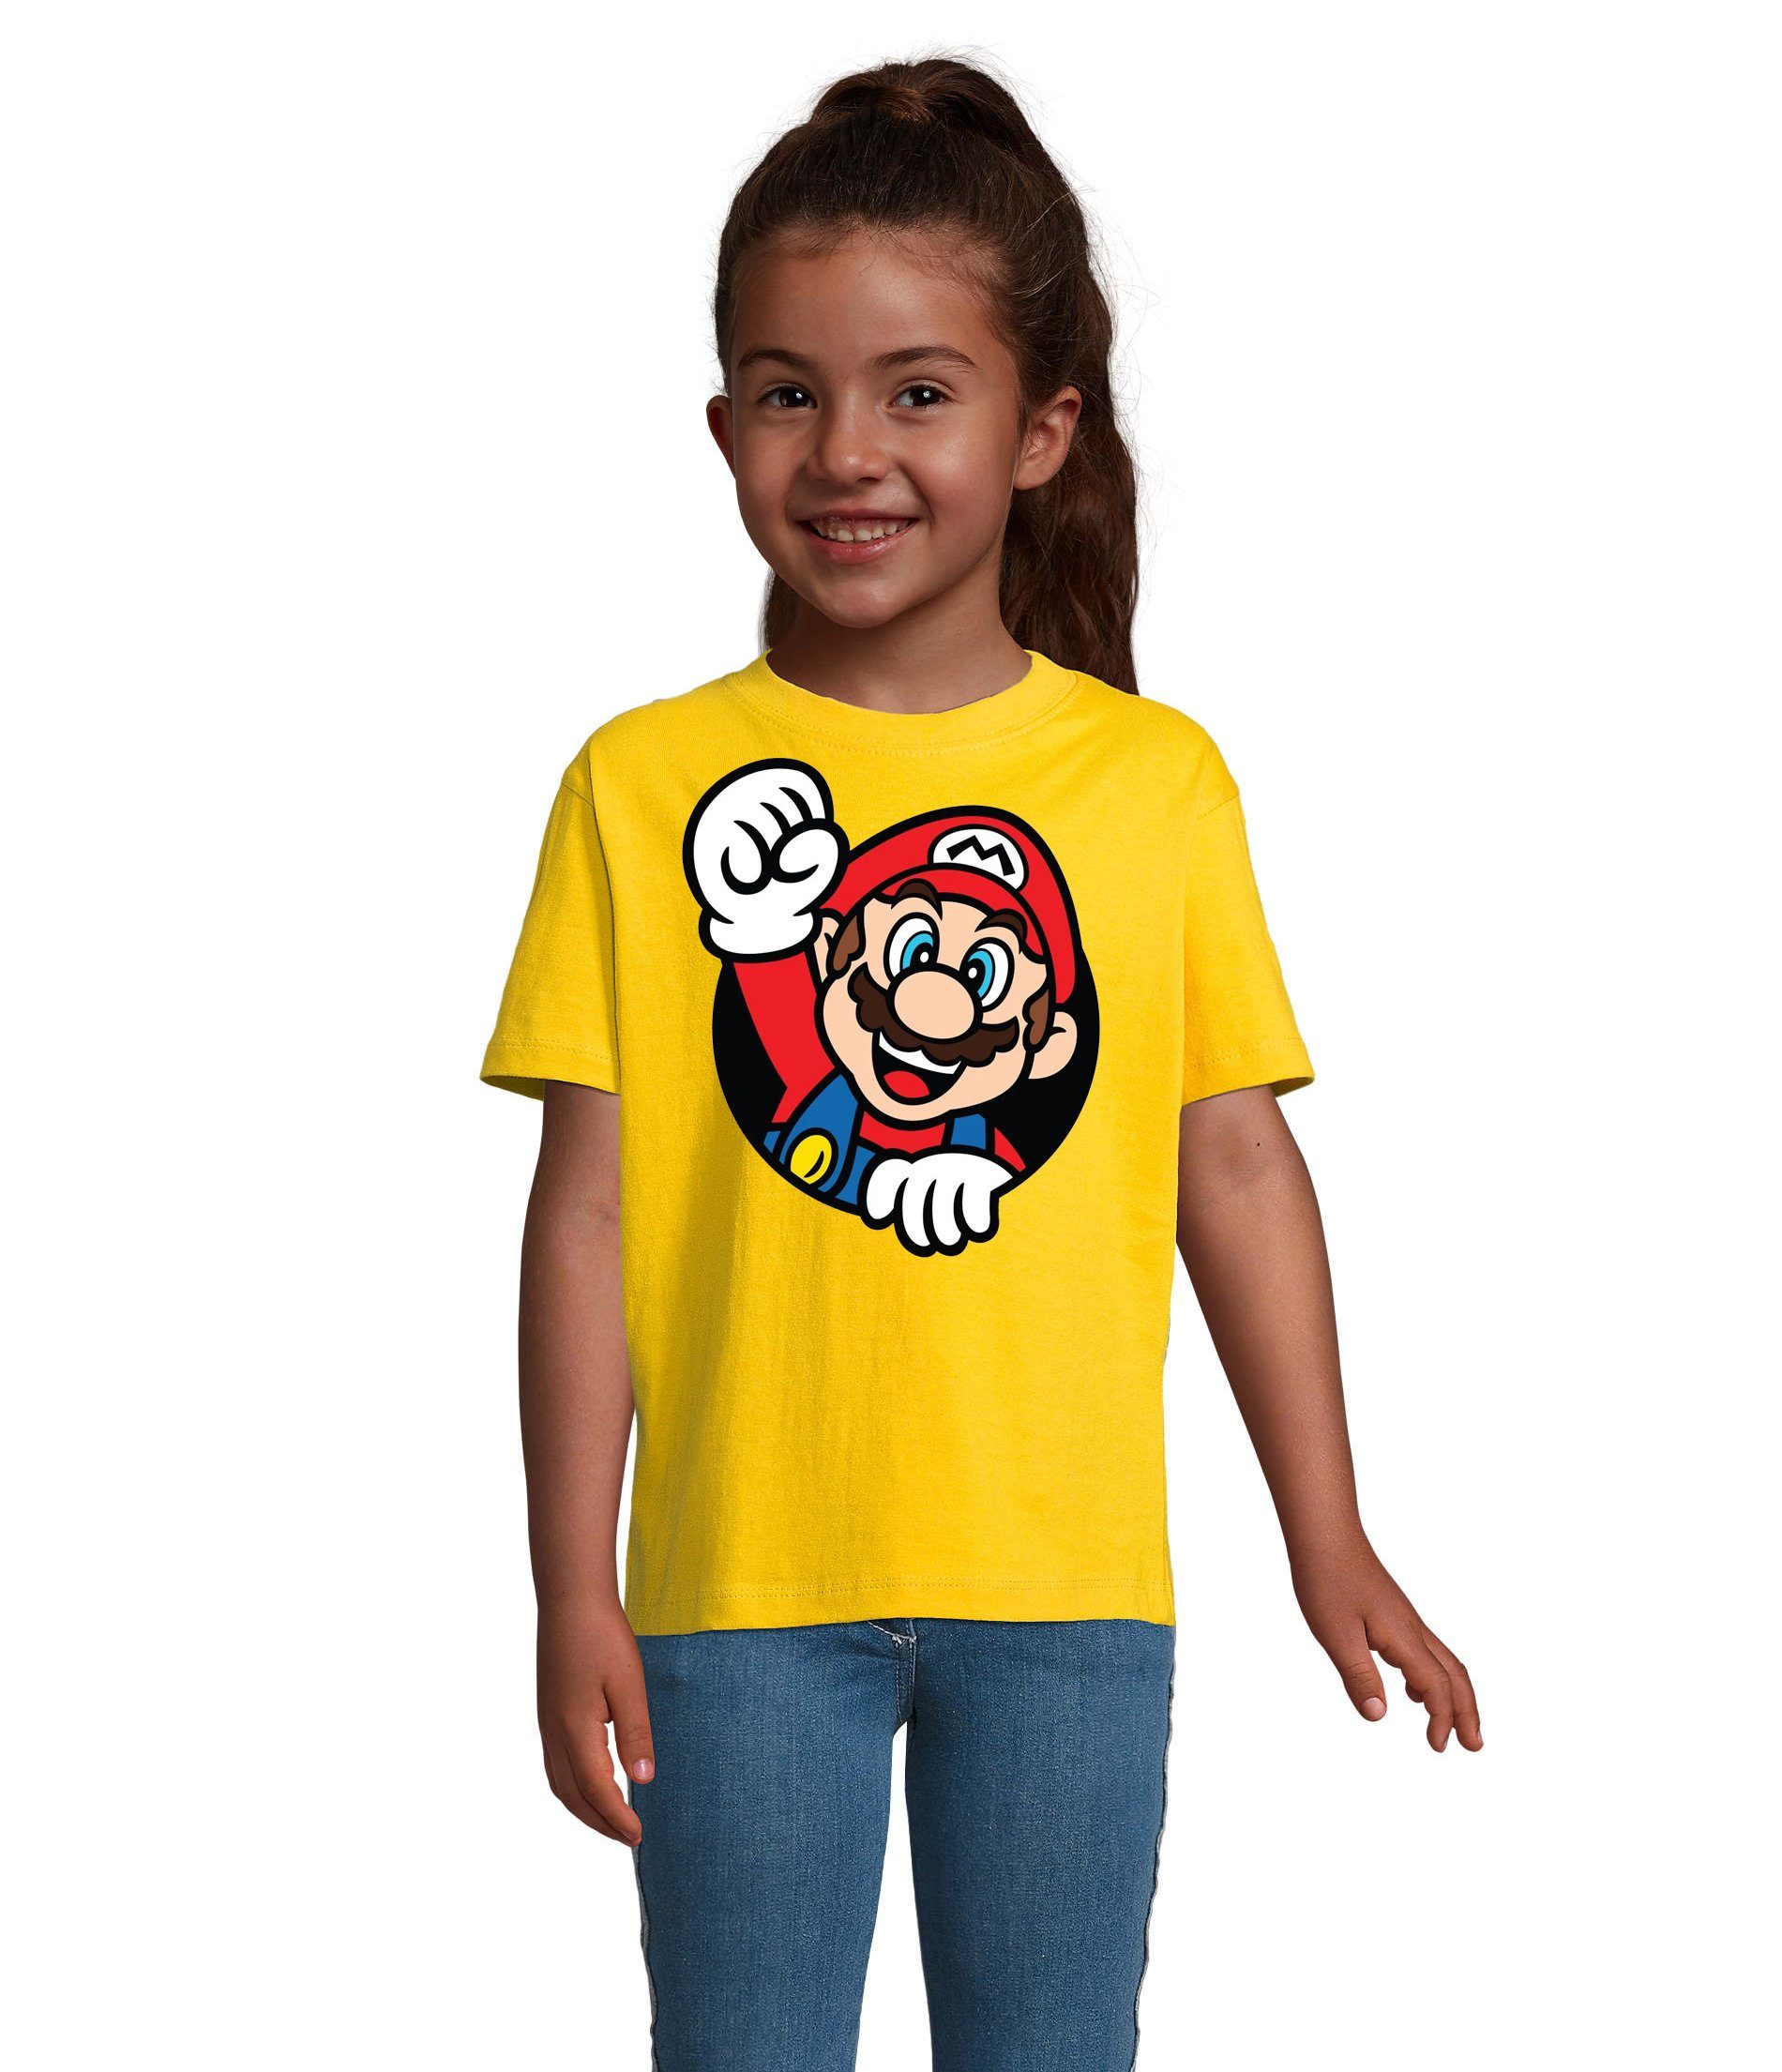 Konsole & Spiel Nerd Gelb Brownie T-Shirt Kinder Mario Konsole Super Nintendo Faust Gaming Blondie